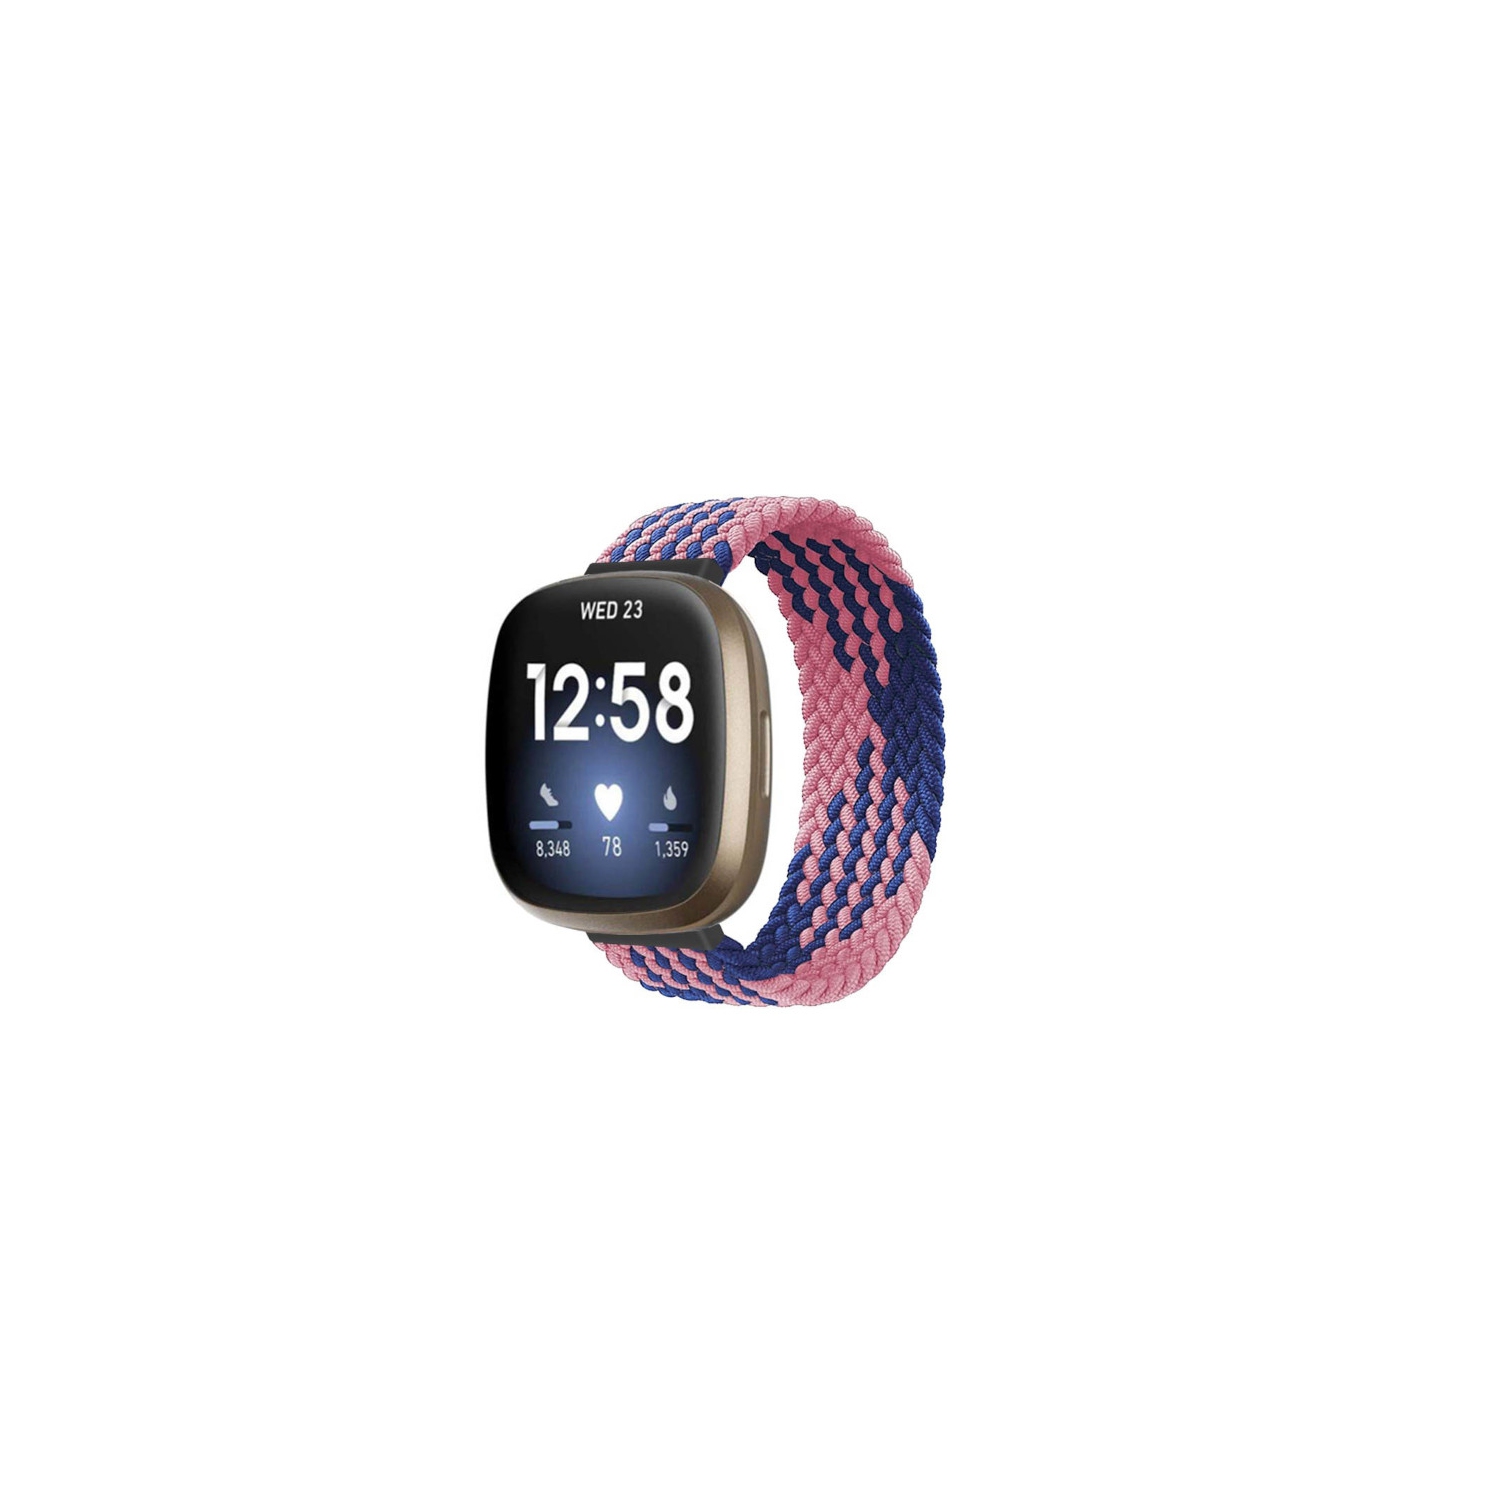 StrapsCo Patterned Elastic Nylon Watch Band Strap for Fitbit Sense - M - Fits 6.2" - 6.5" Wrist - Pink & Blue Buffalo